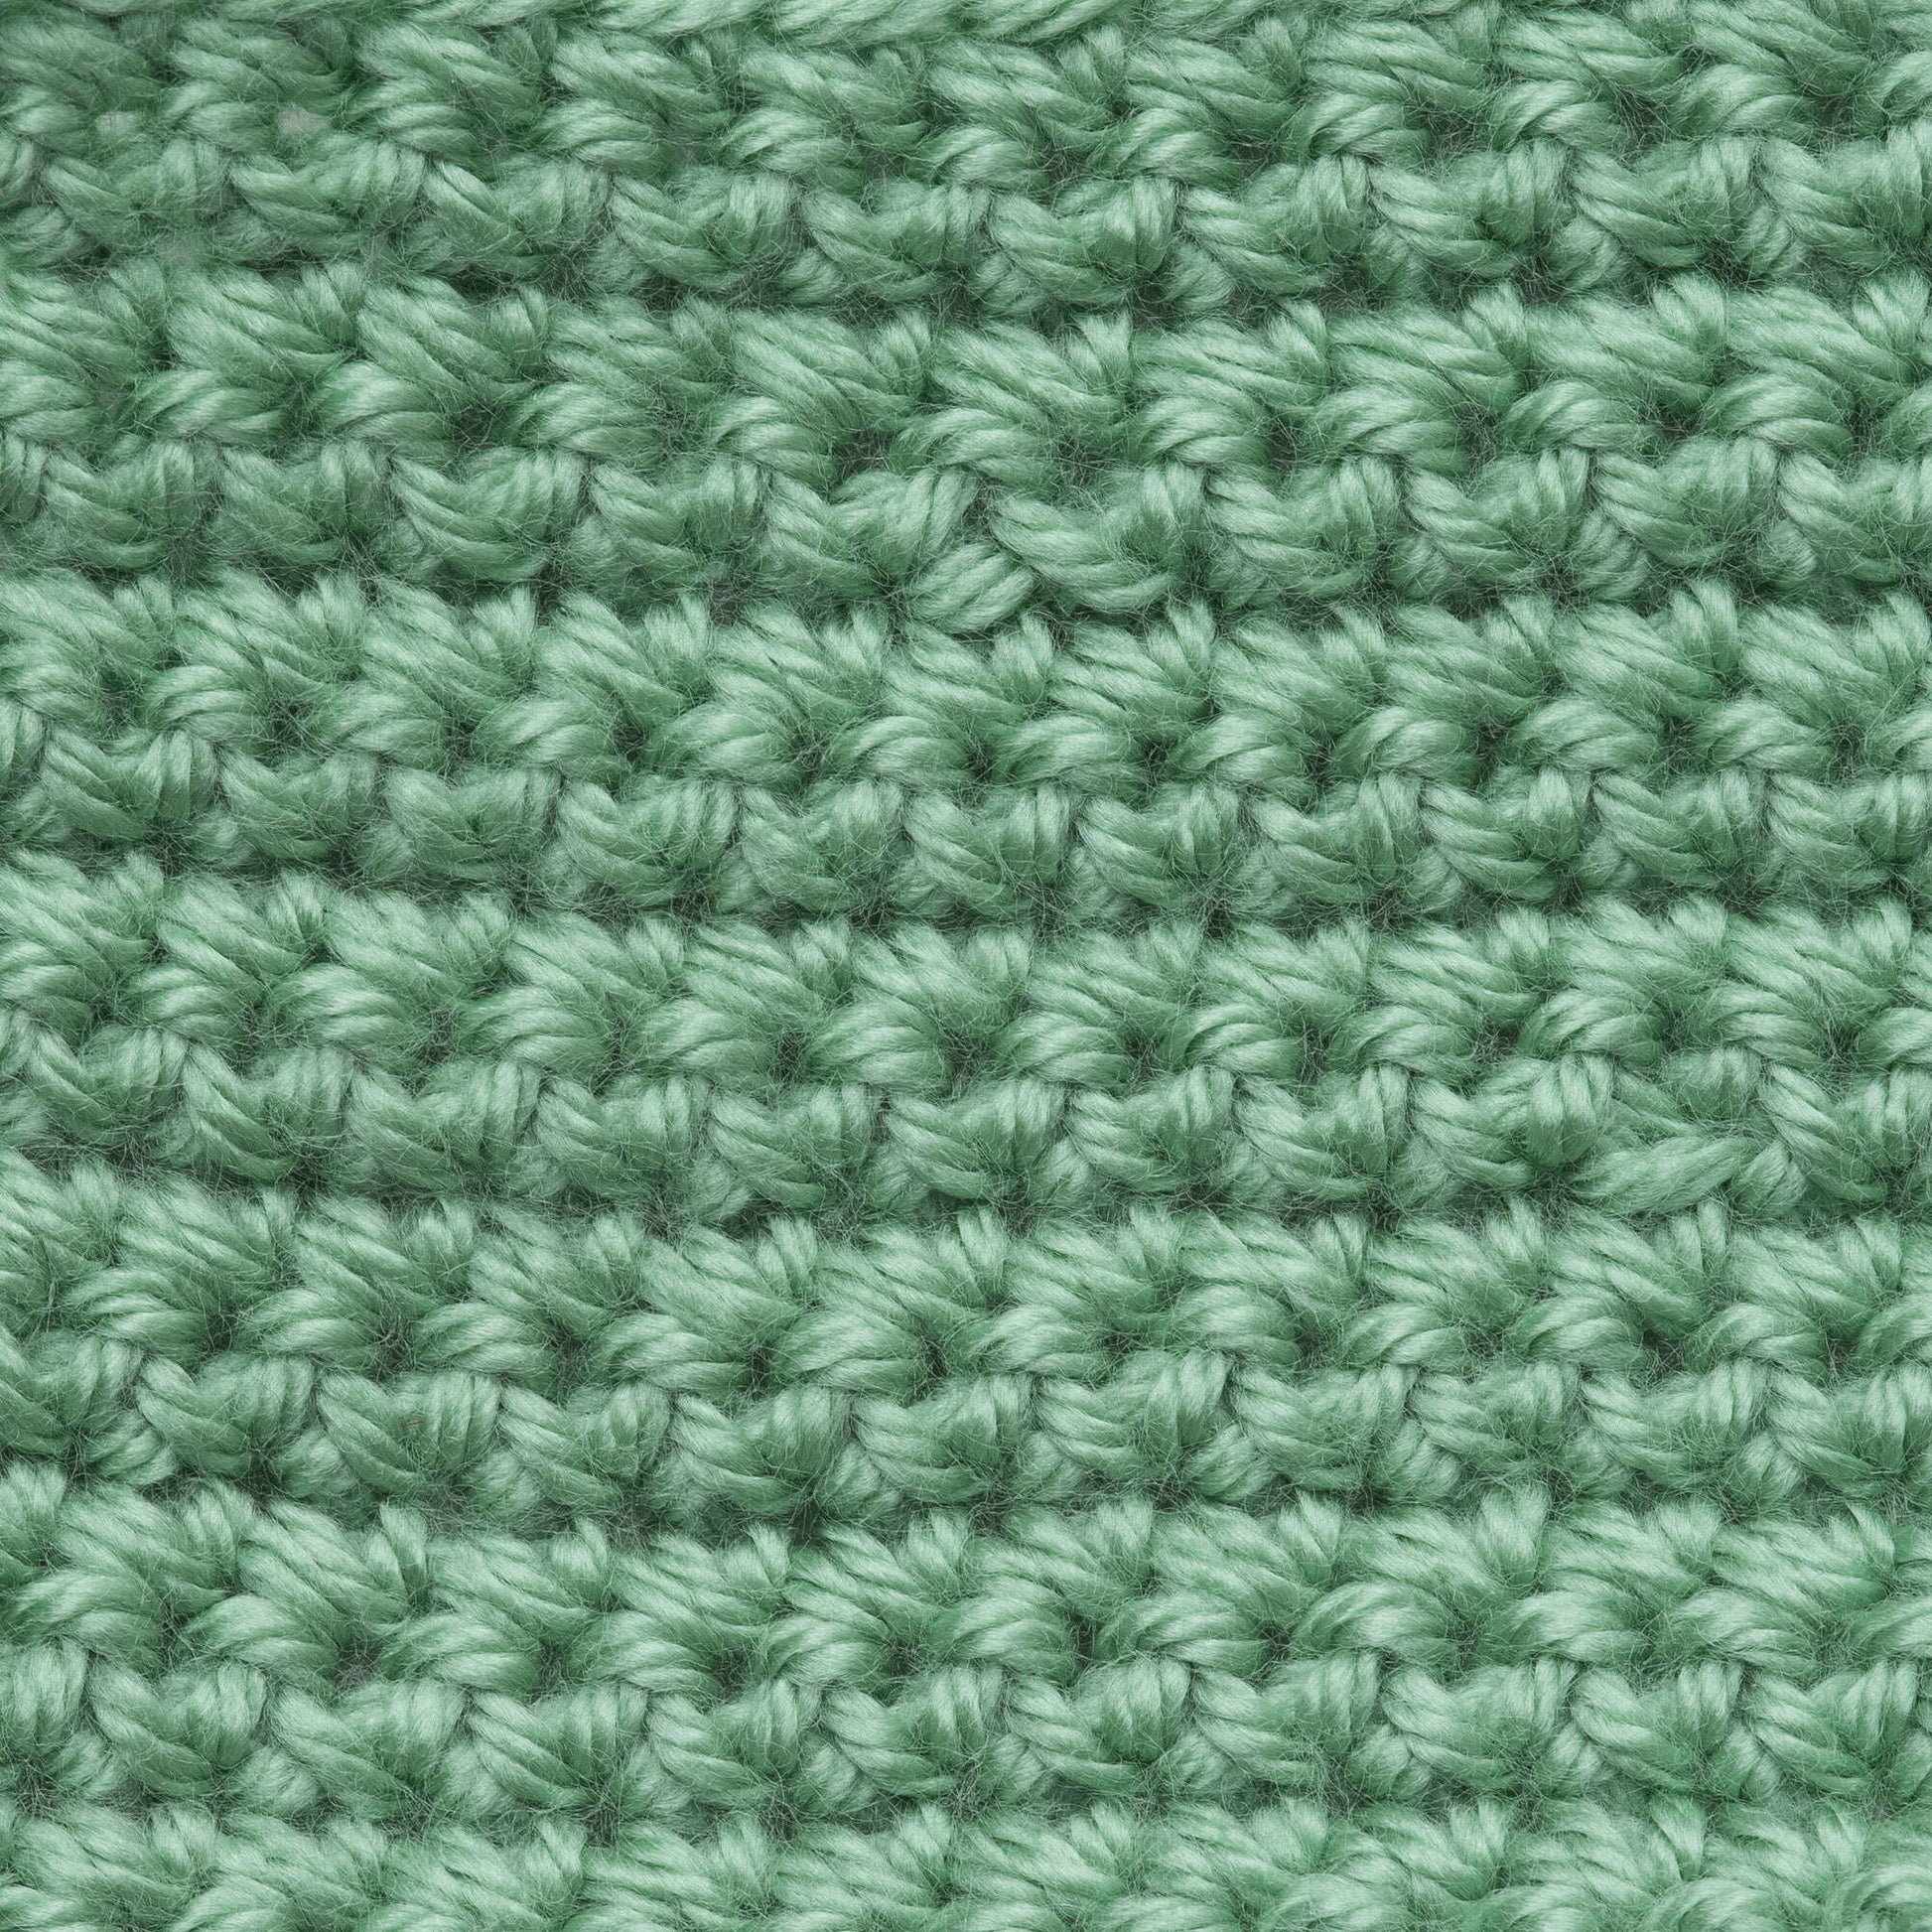  Operitacx Crochet Yarn Thick Knitting Yarn Knitting Yarn Soft  Yarn for Knitting Blanket Yarn Baby Wool Yarn Simply Soft Yarn Knitting  Accessories Yarn Kit Black Yarn Red Yarn Crape Baby Line 